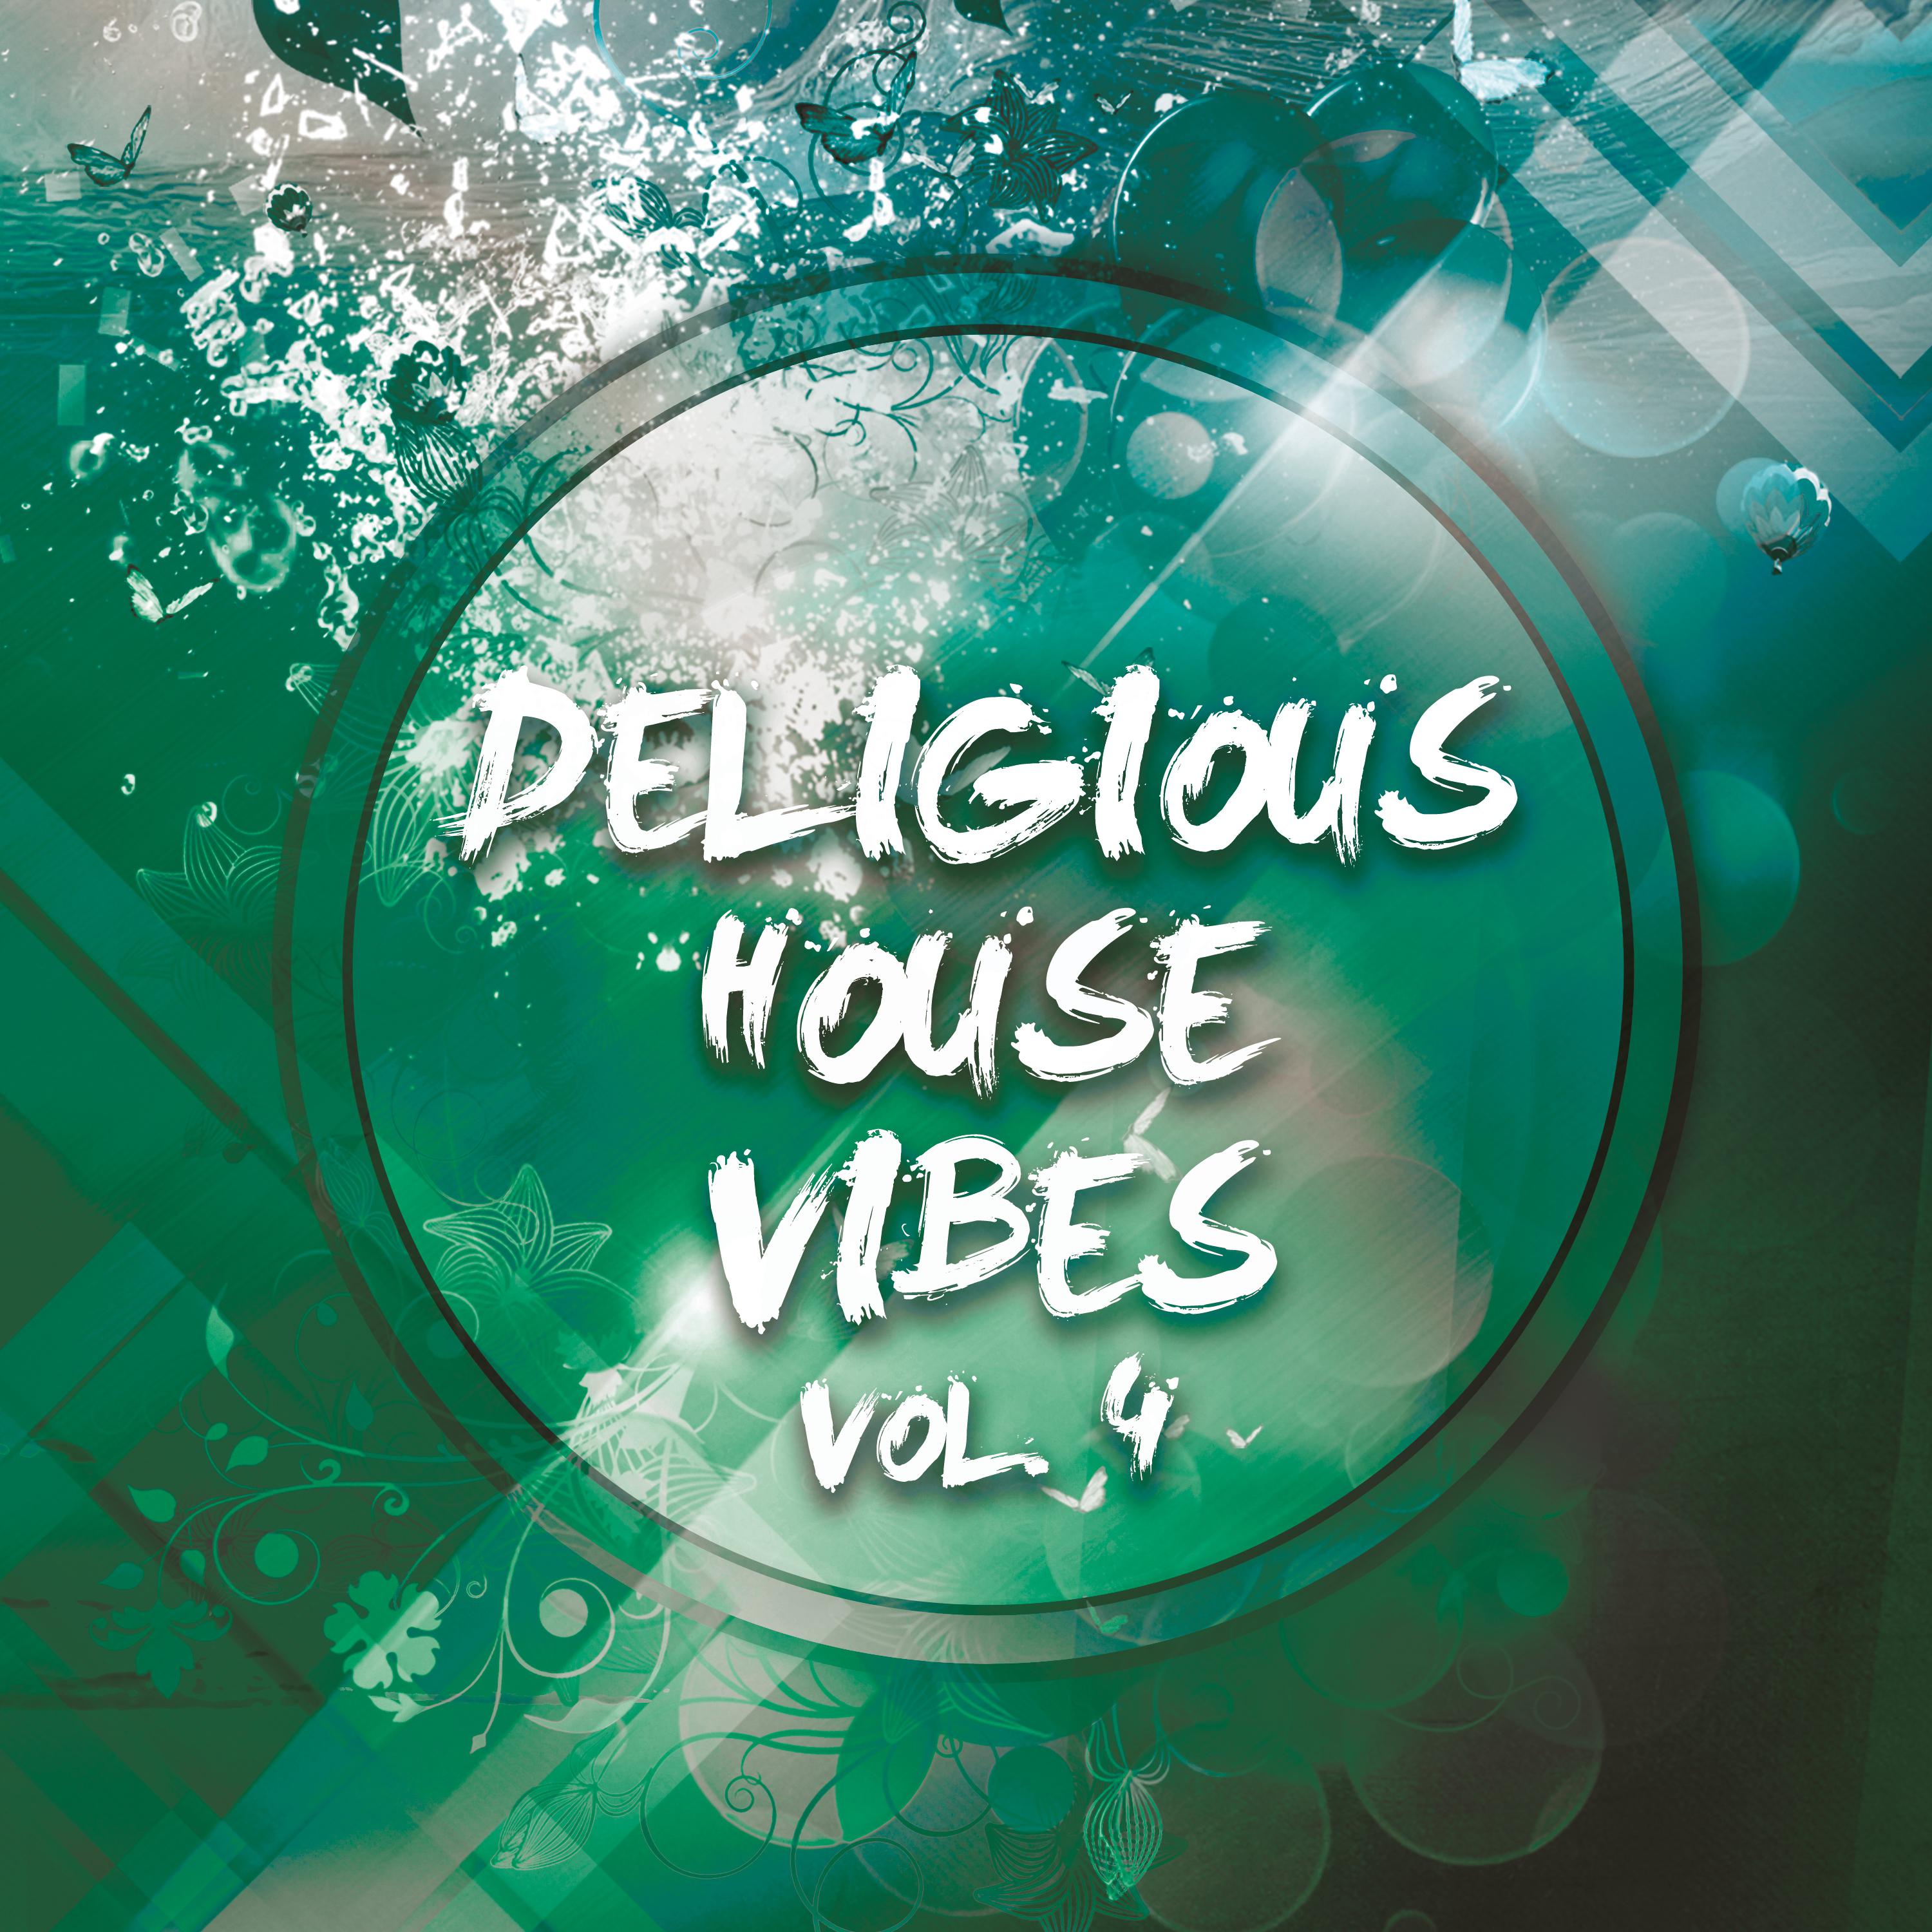 Deligious House Vibes, Vol. 4